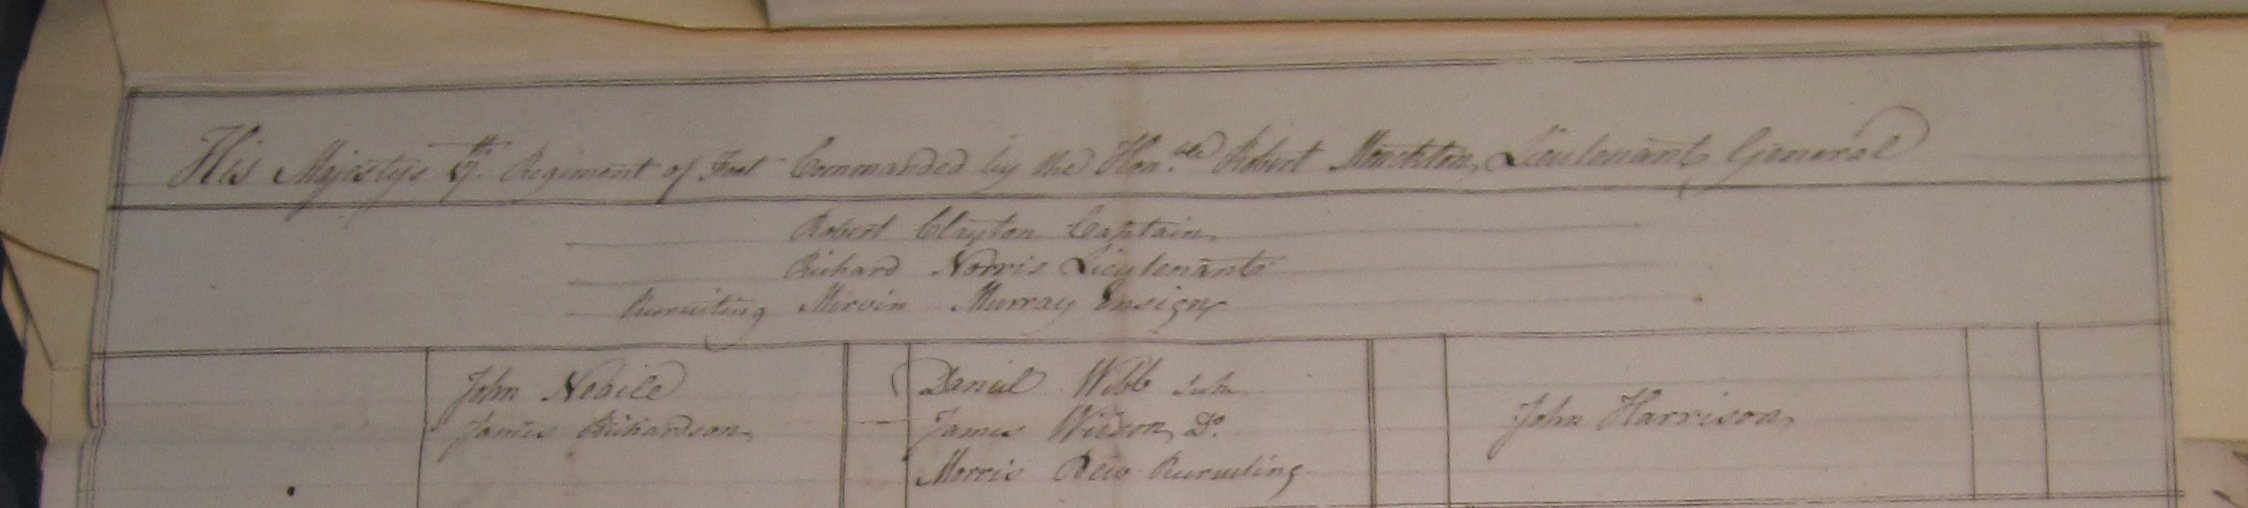 IMG_2350 Clayton Dec 1775-June 1776 detail1